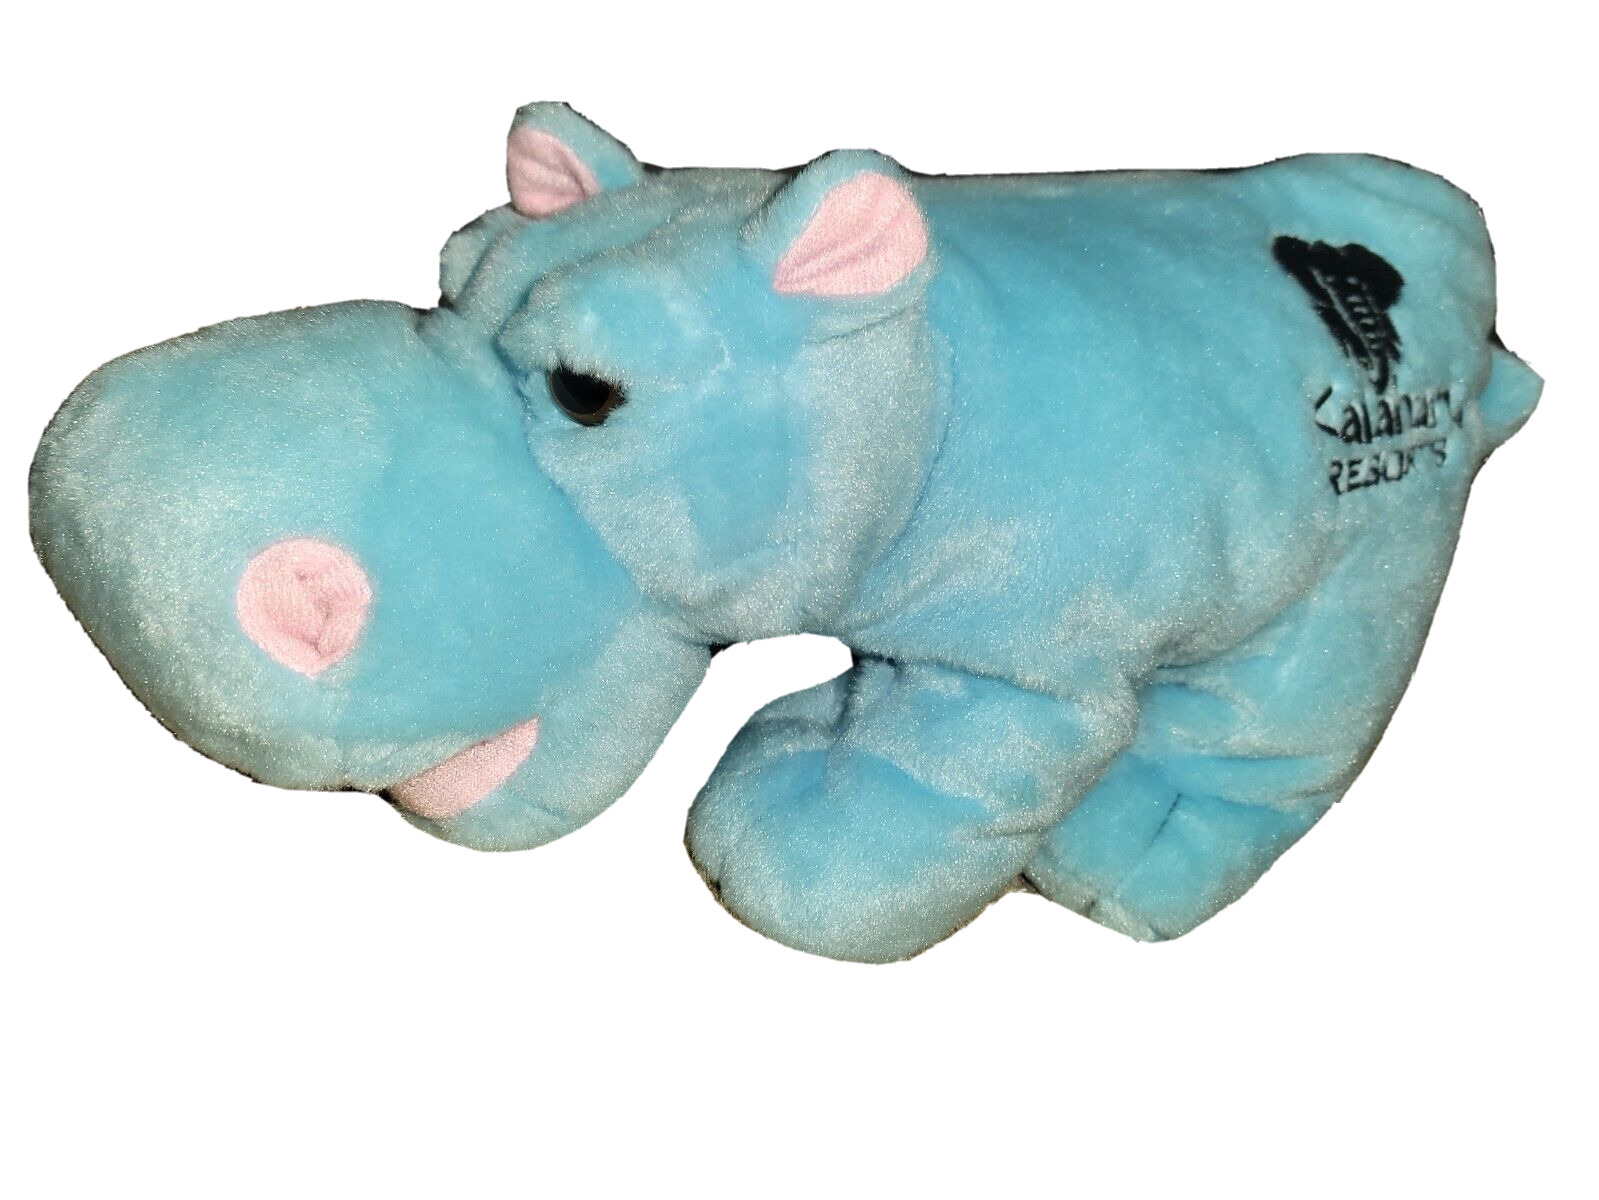 KALAHARI RESORTS 2006 WISHPETS light blue HIPPO STUFFED ANIMAL PLUSH TOY